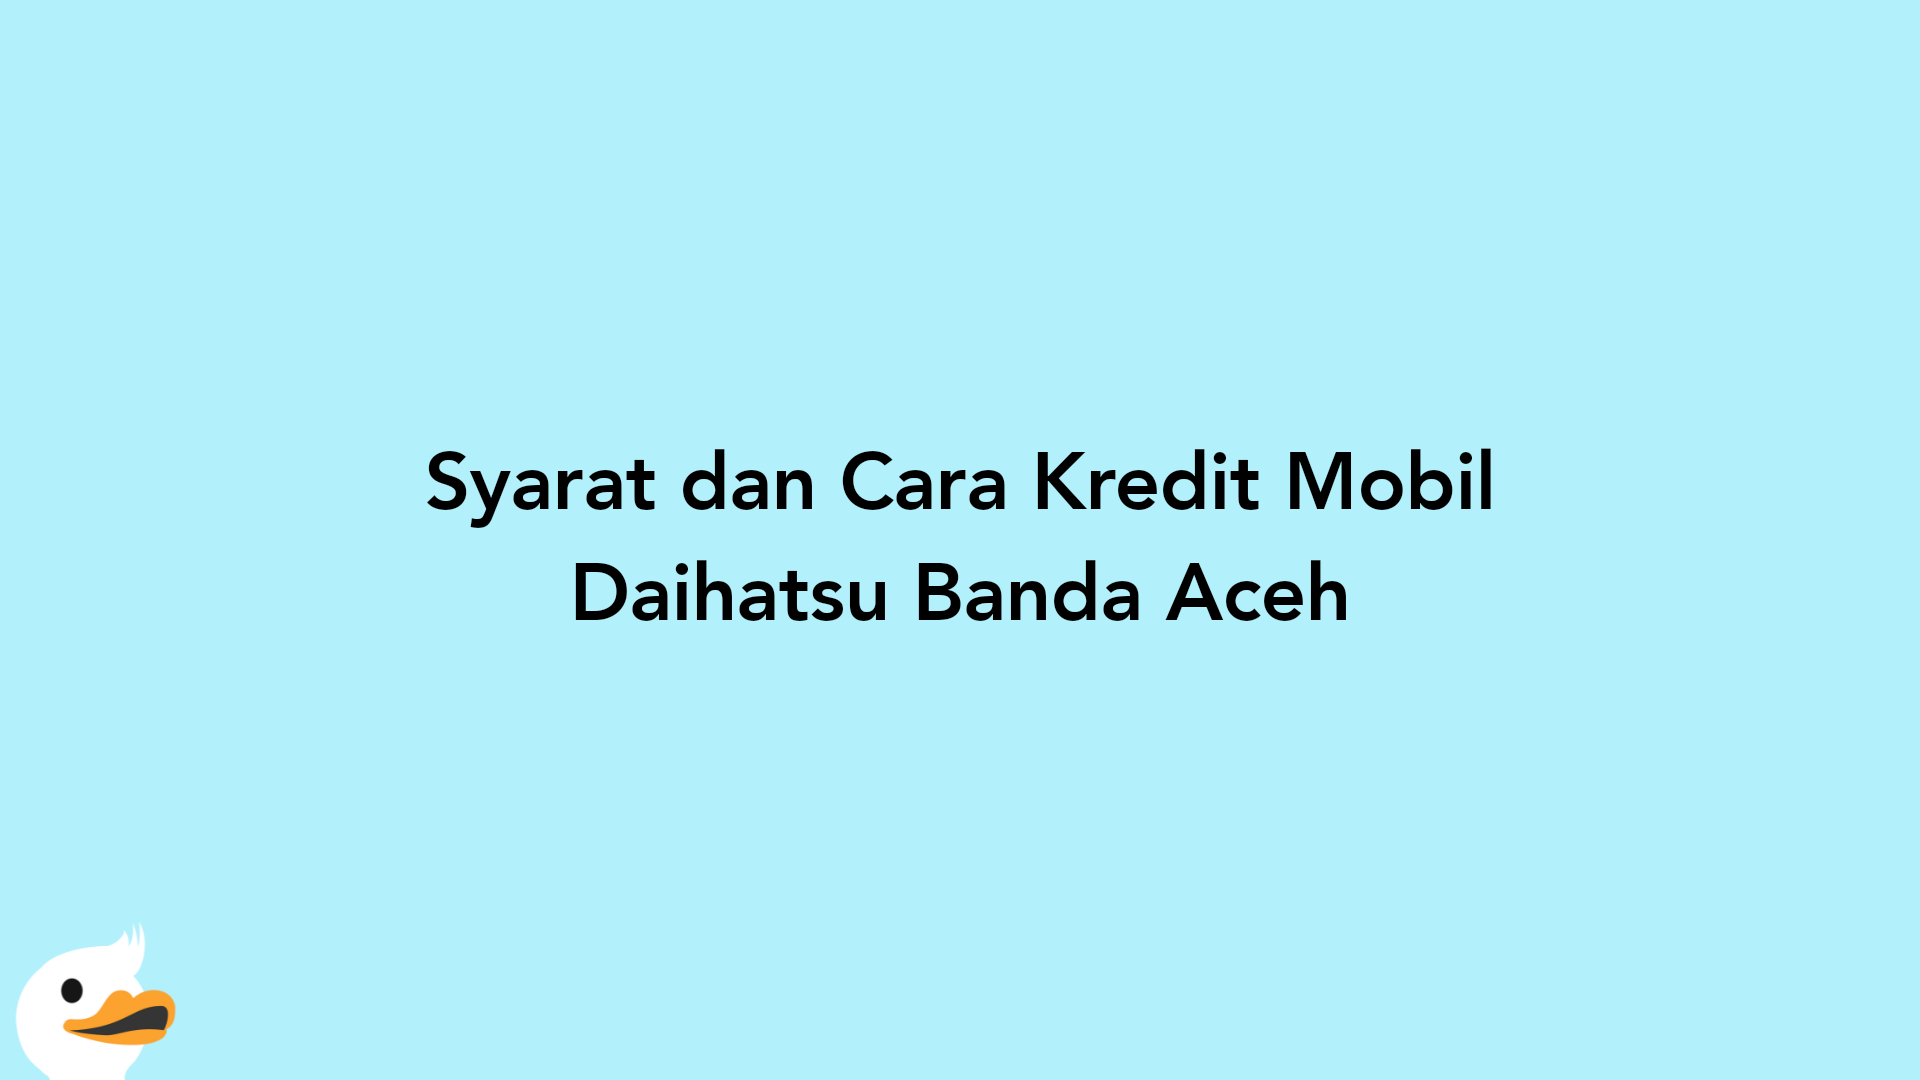 Syarat dan Cara Kredit Mobil Daihatsu Banda Aceh